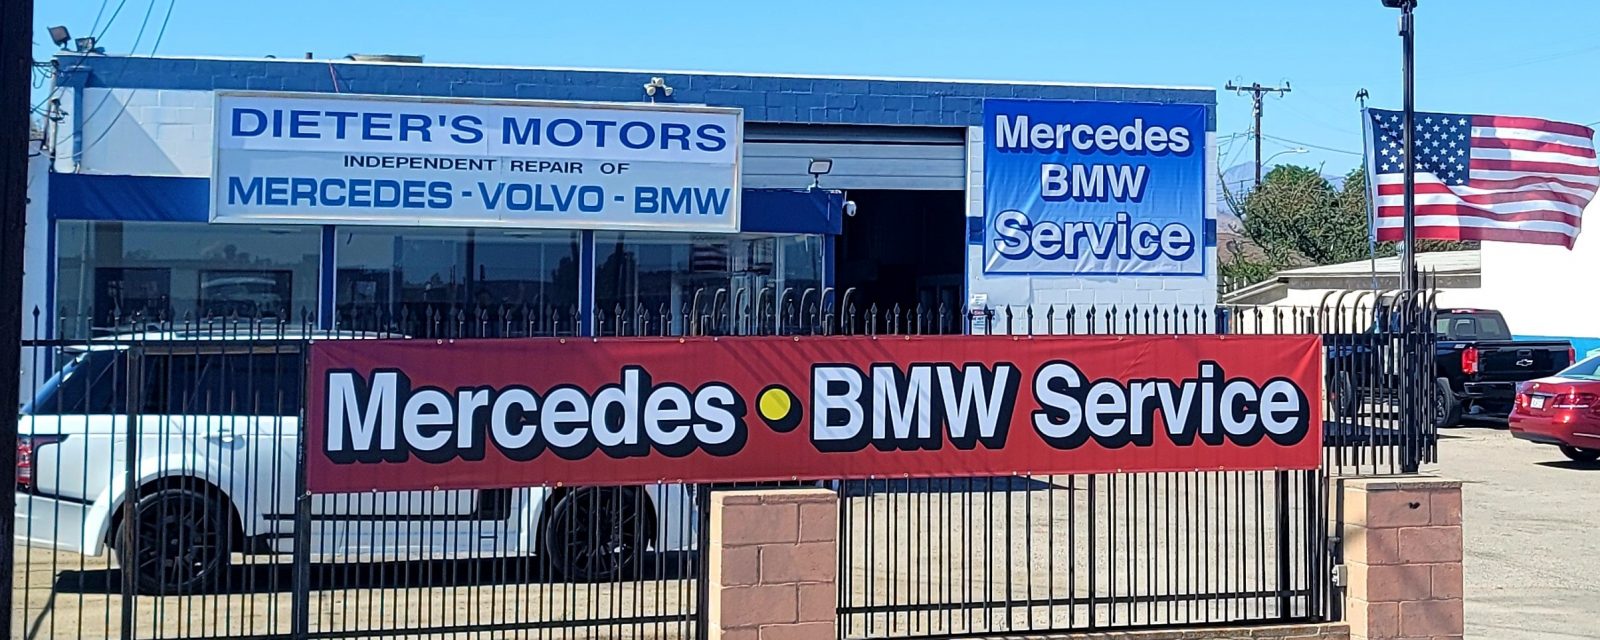 Mercedes & BMW Service | Dieter's Motors